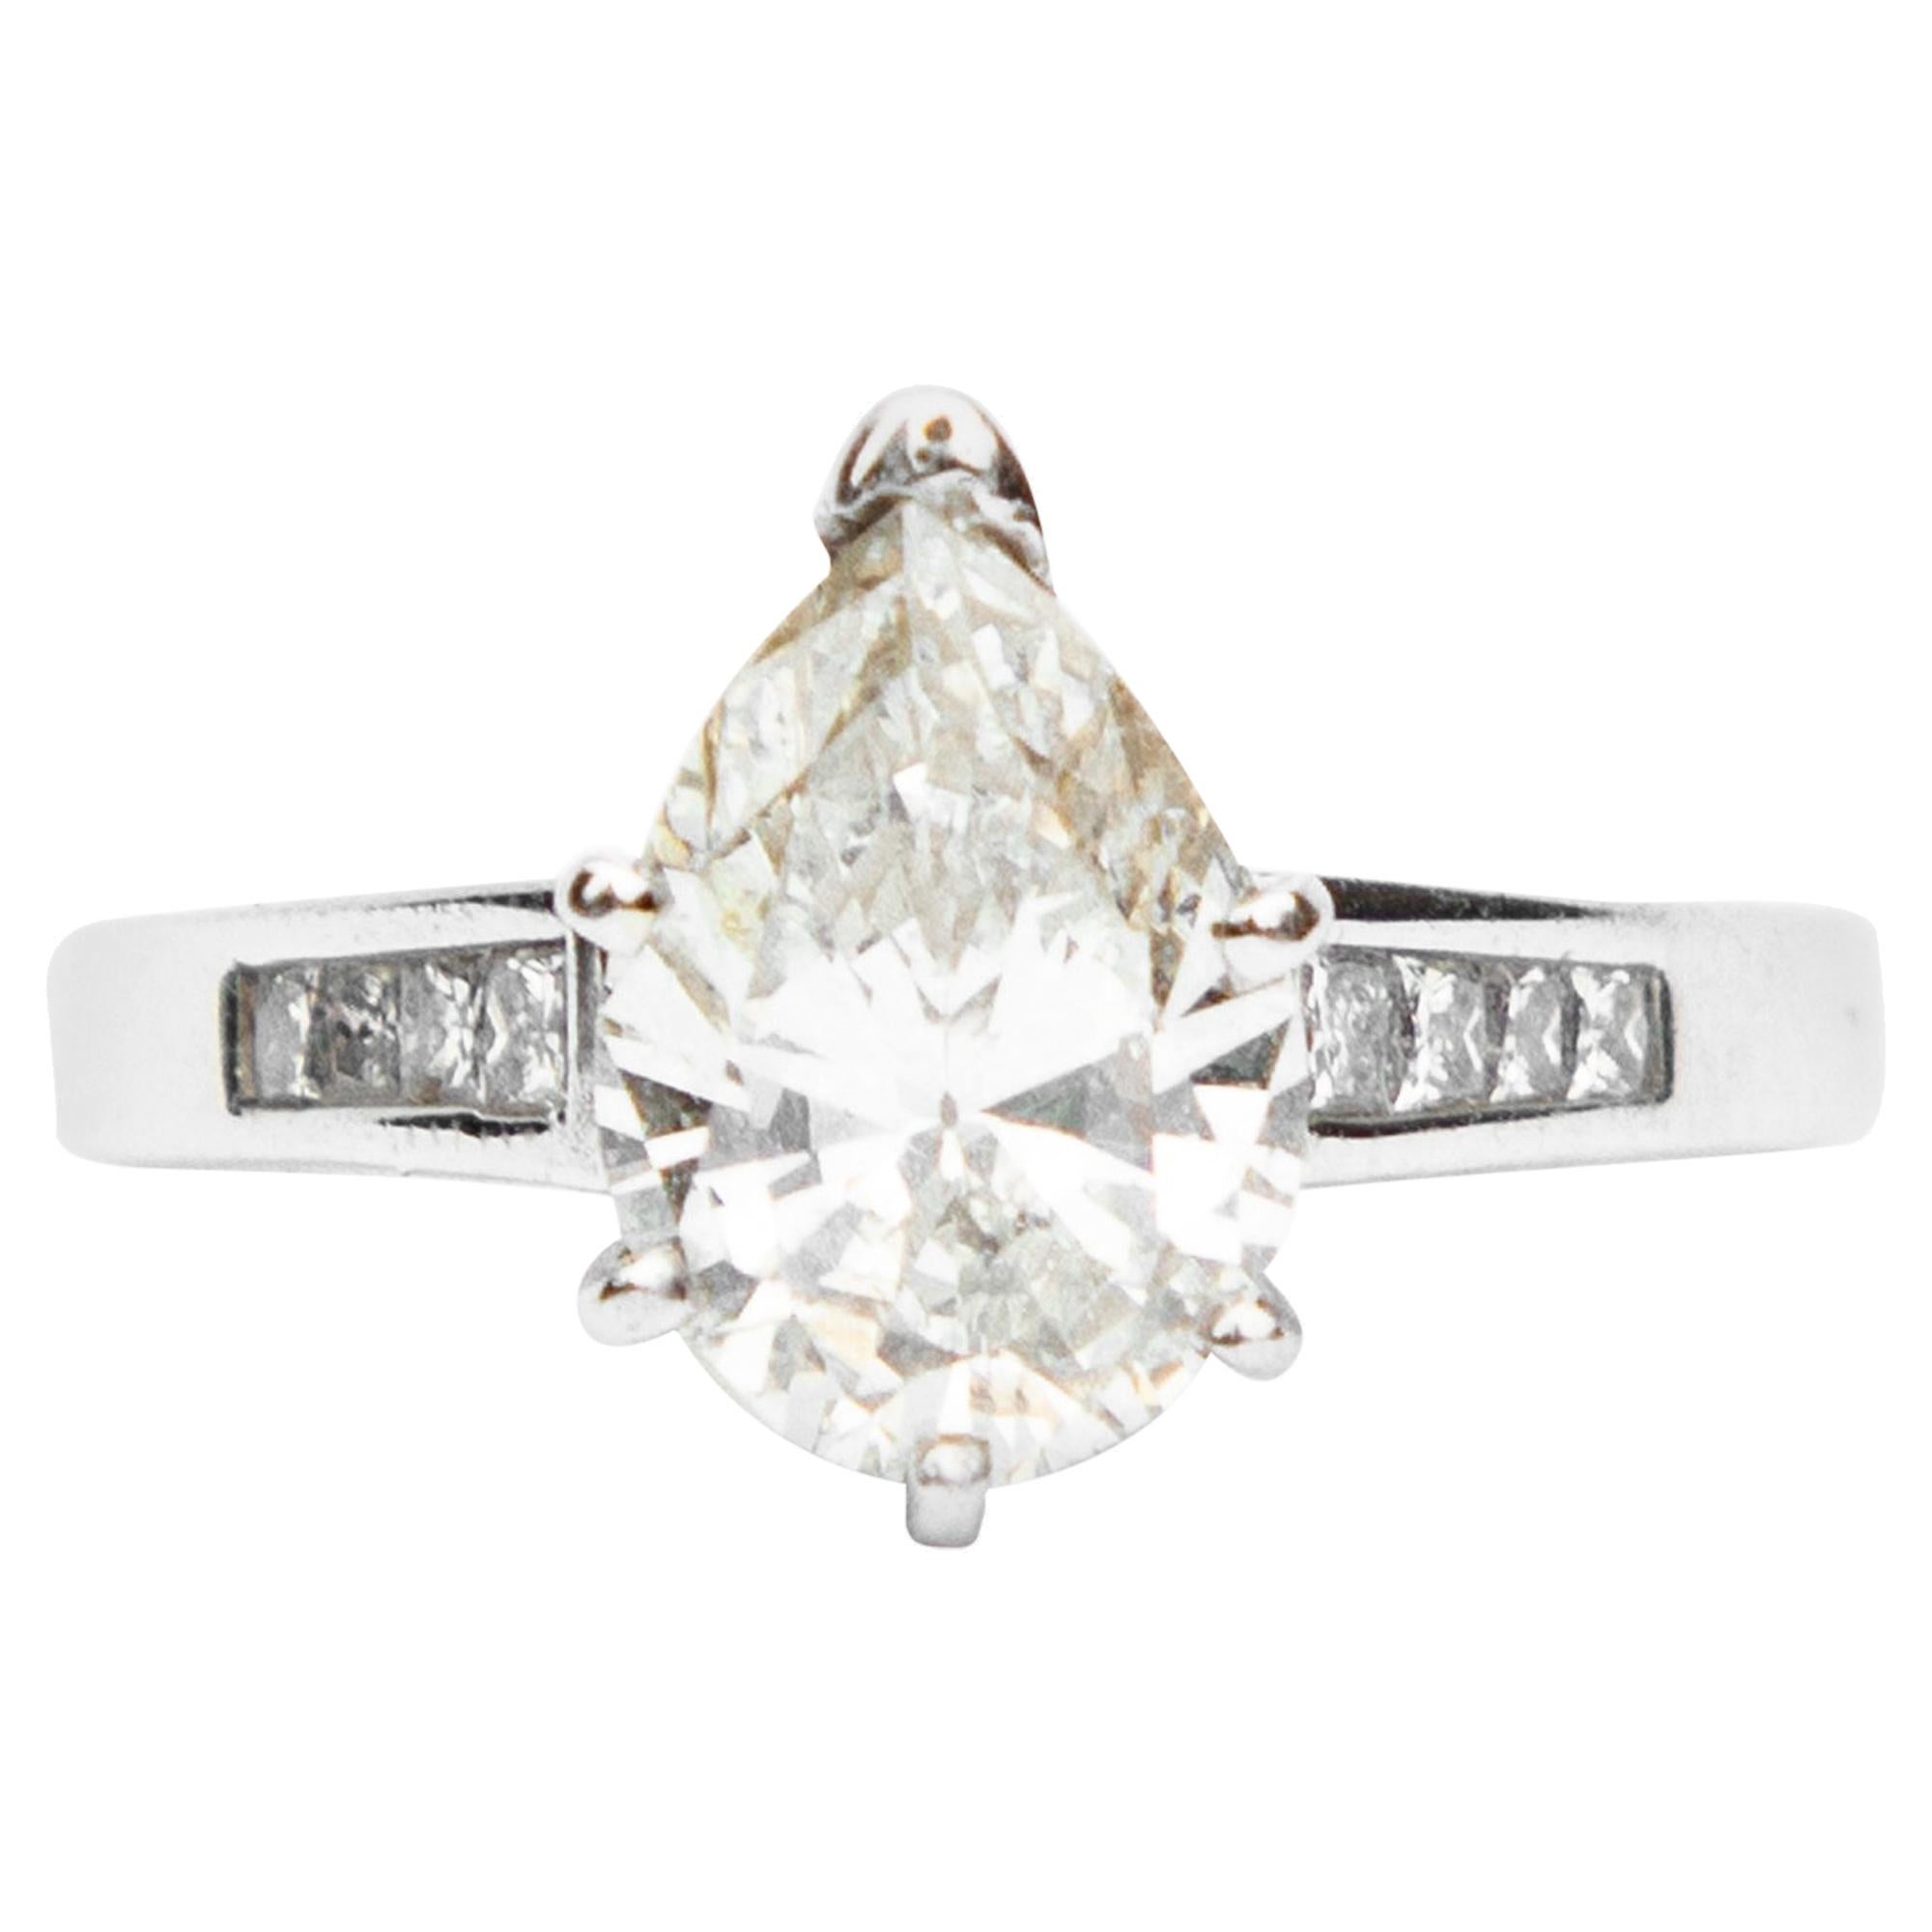 Art Deco Inspired Pear Cut White Gold Diamond Ring